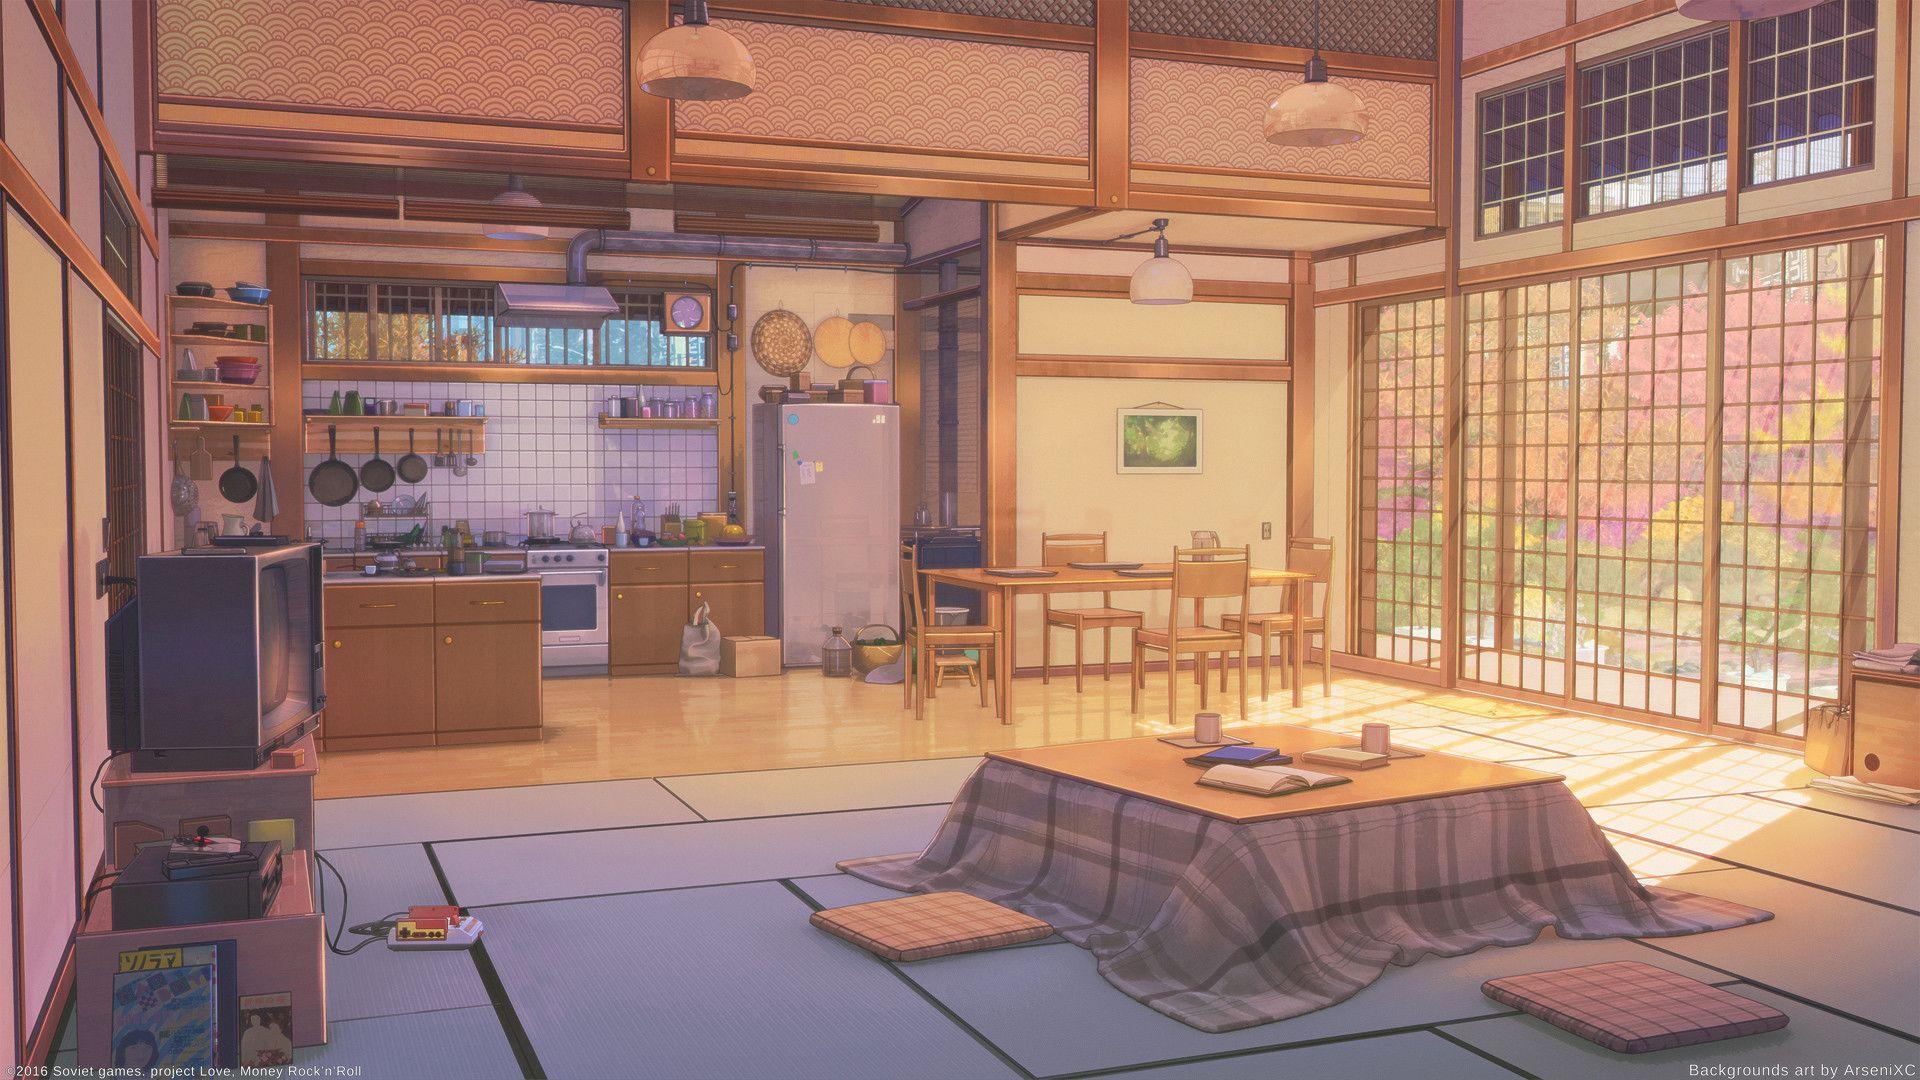 Living room and kitchen, Arseniy Chebynkin. Anime